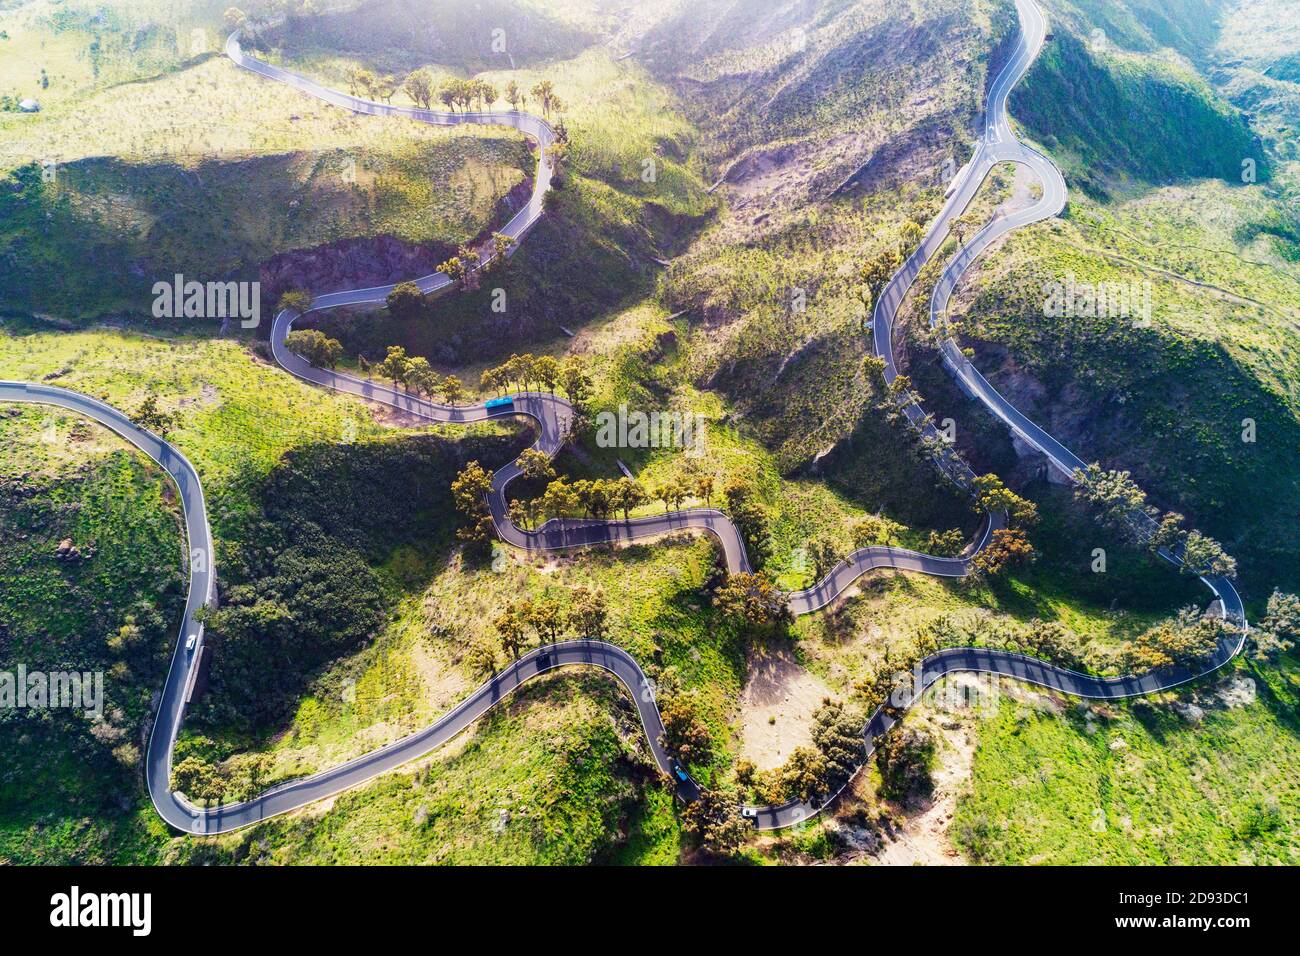 Europa, España, Islas Canarias, Gran Canaria, el serpenteante camino de montaña Foto de stock